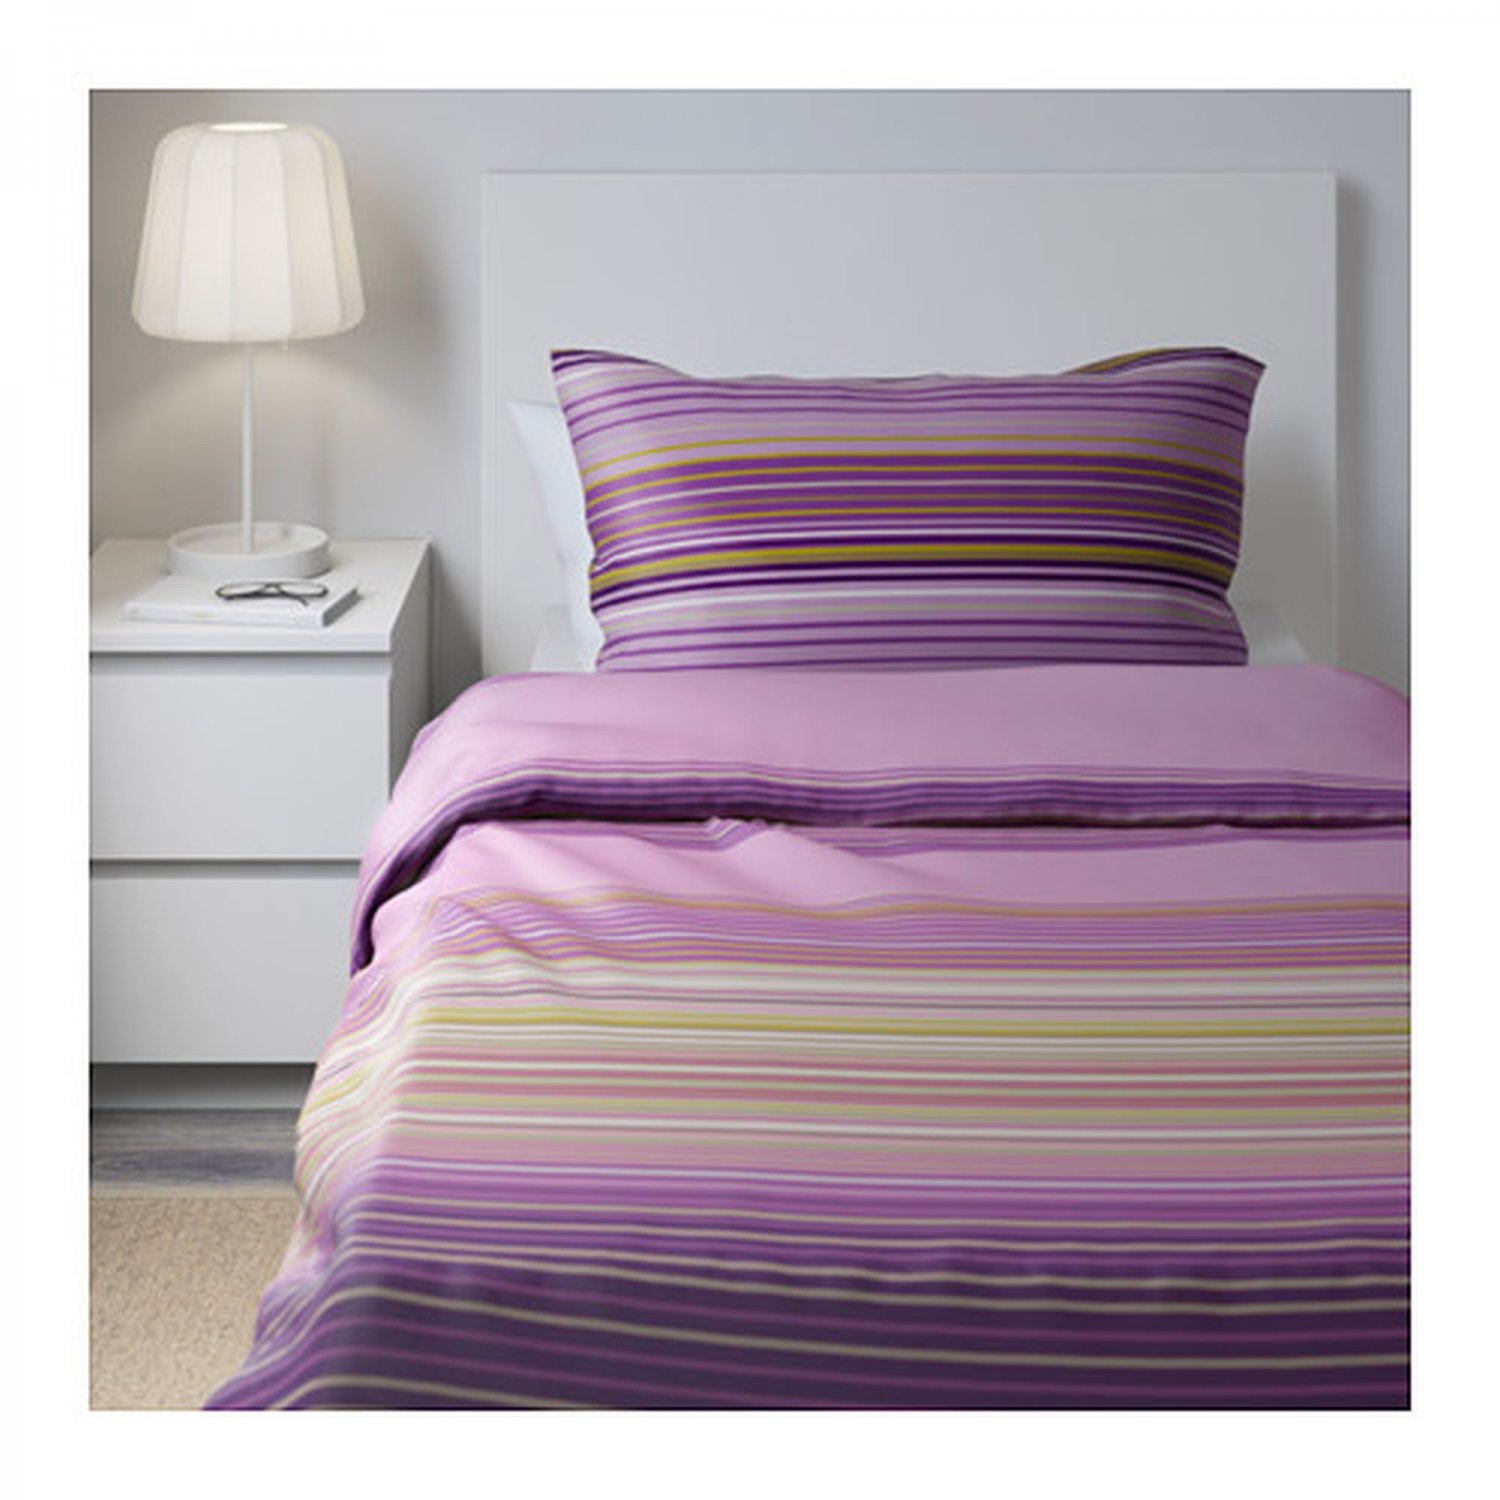 IKEA Palmlilja TWIN Duvet COVER and Pillowcase Set Purple Lilac Stripes